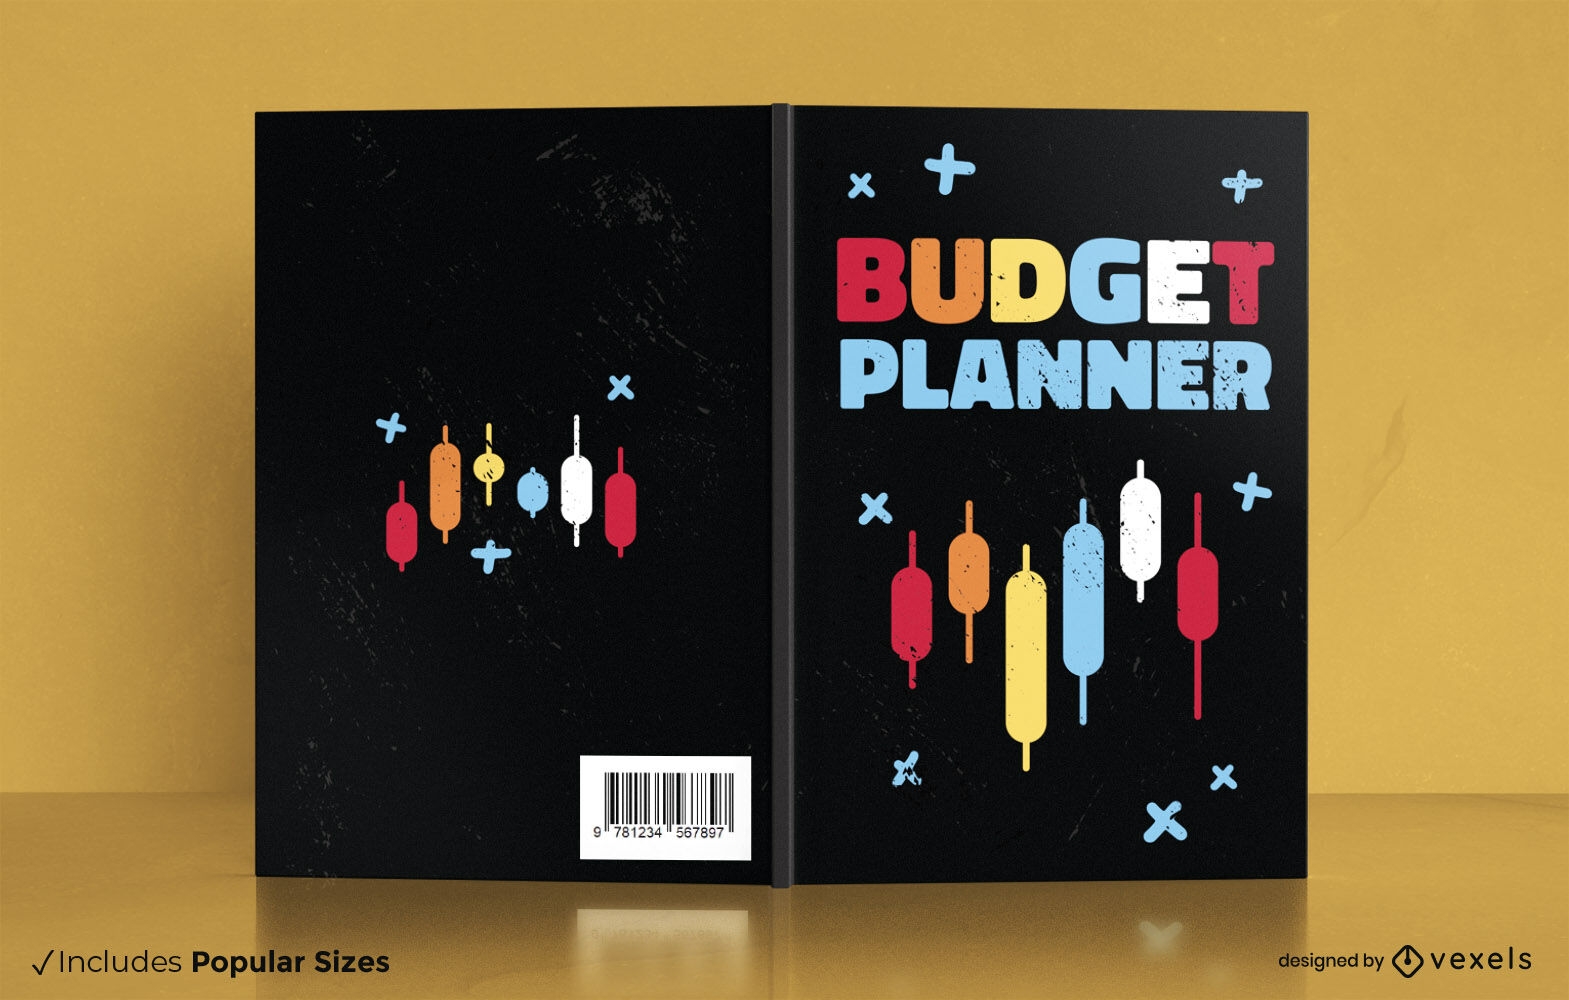 Budget panner book cover design KDP 